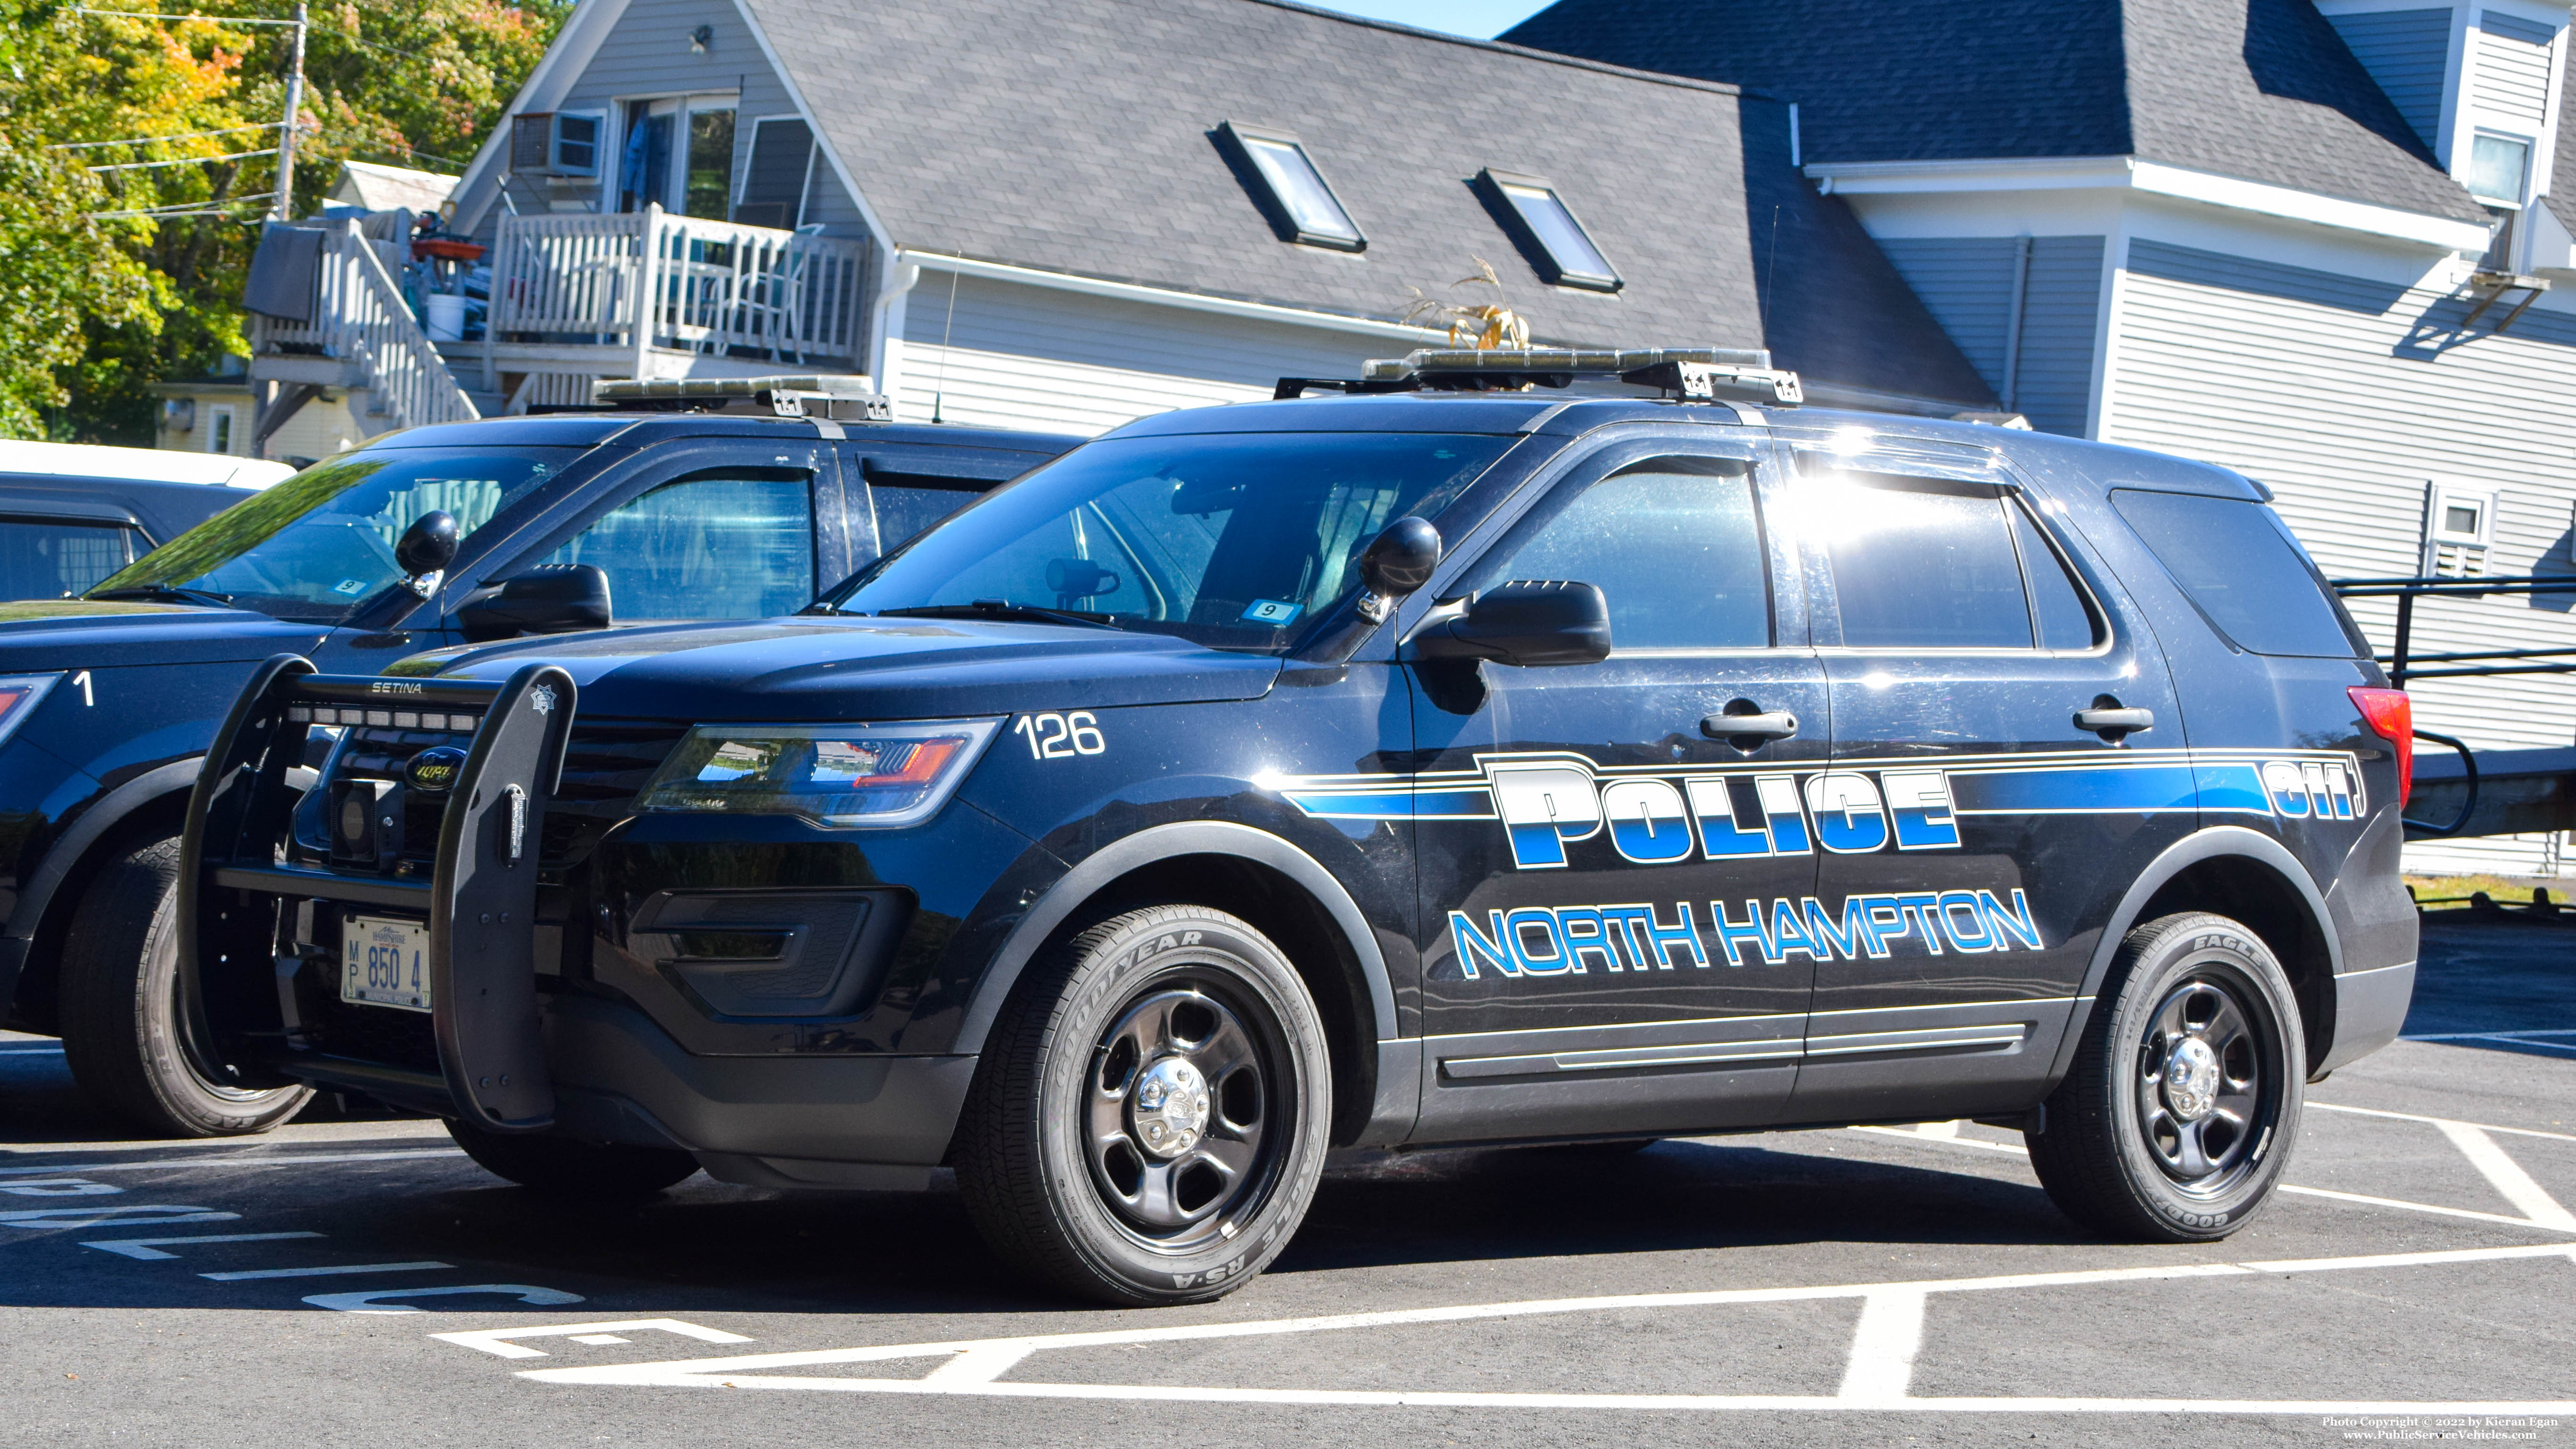 A photo  of North Hampton Police
            Car 126, a 2016-2019 Ford Police Interceptor Utility             taken by Kieran Egan